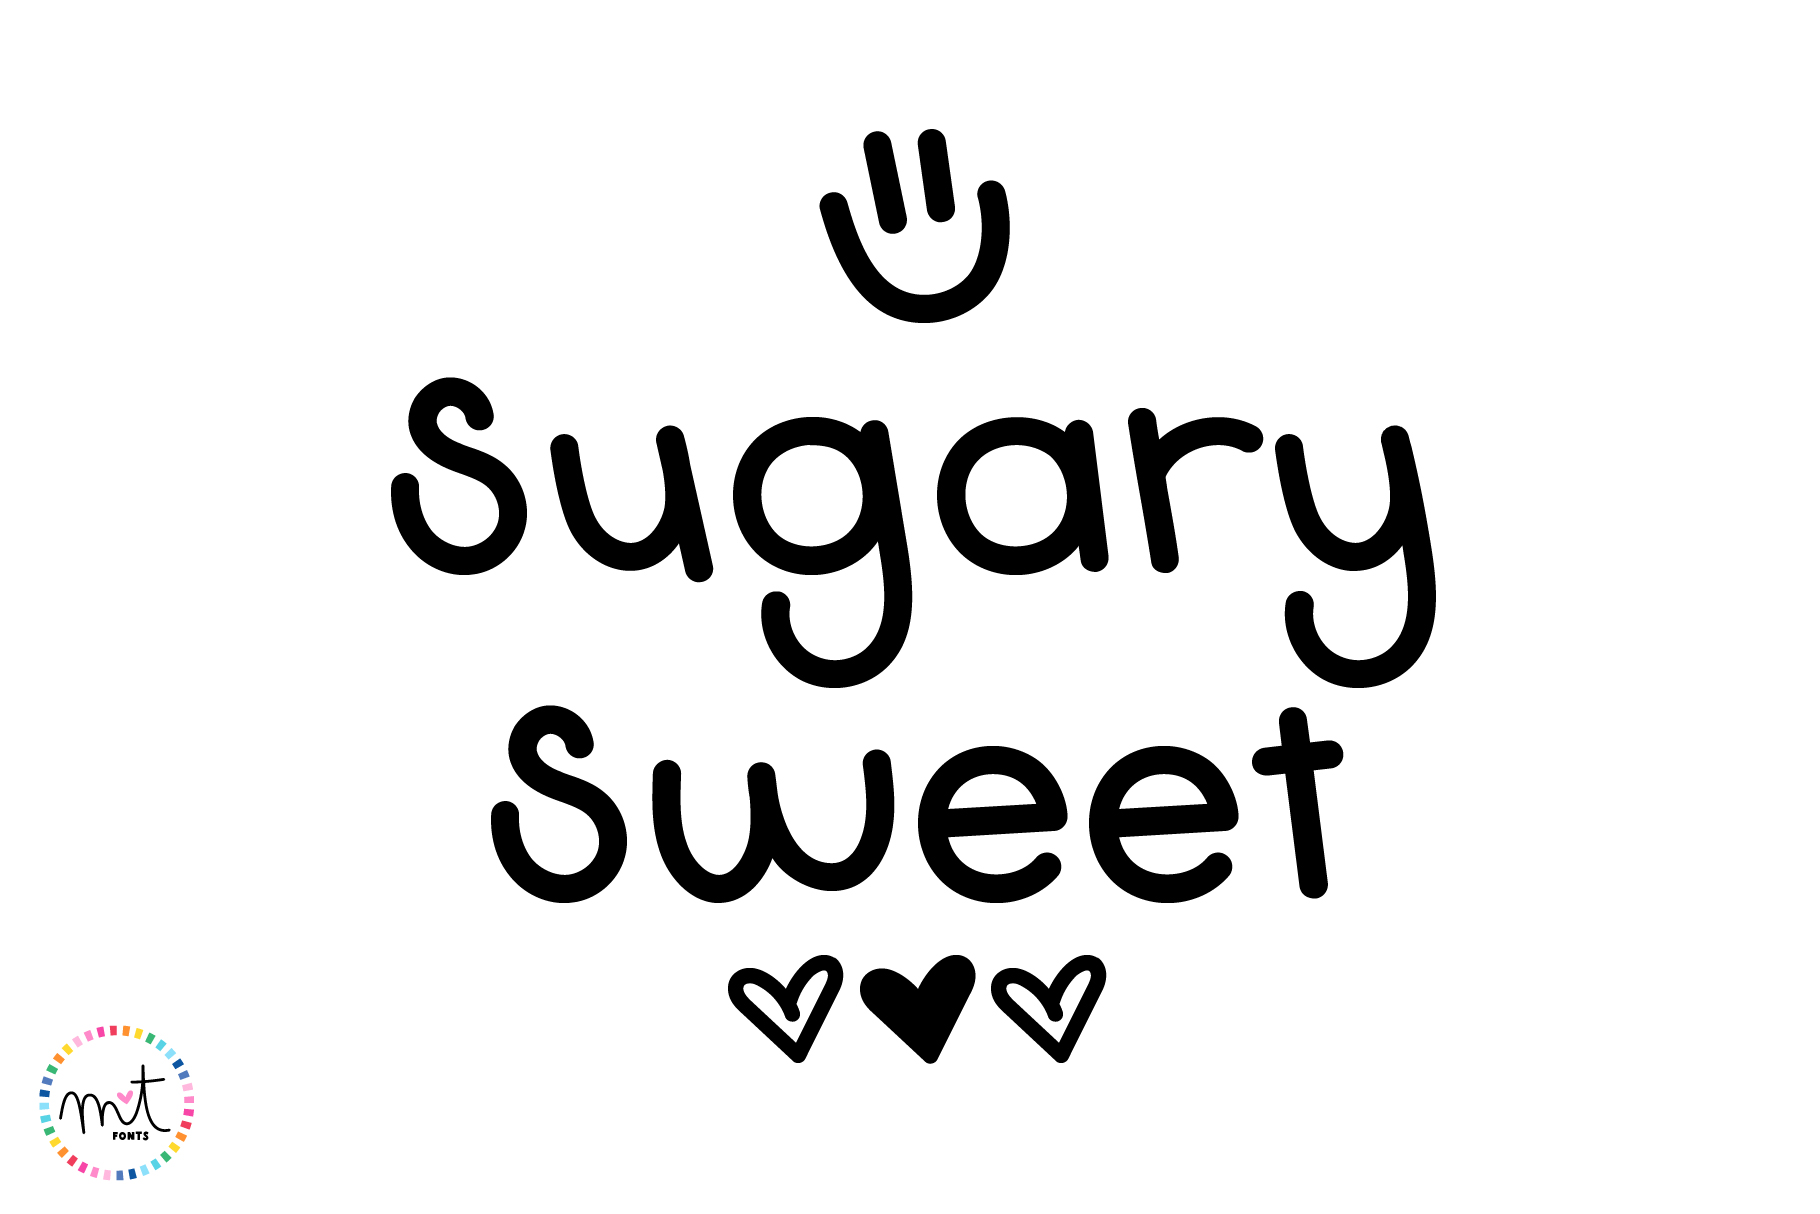 sugary sweet